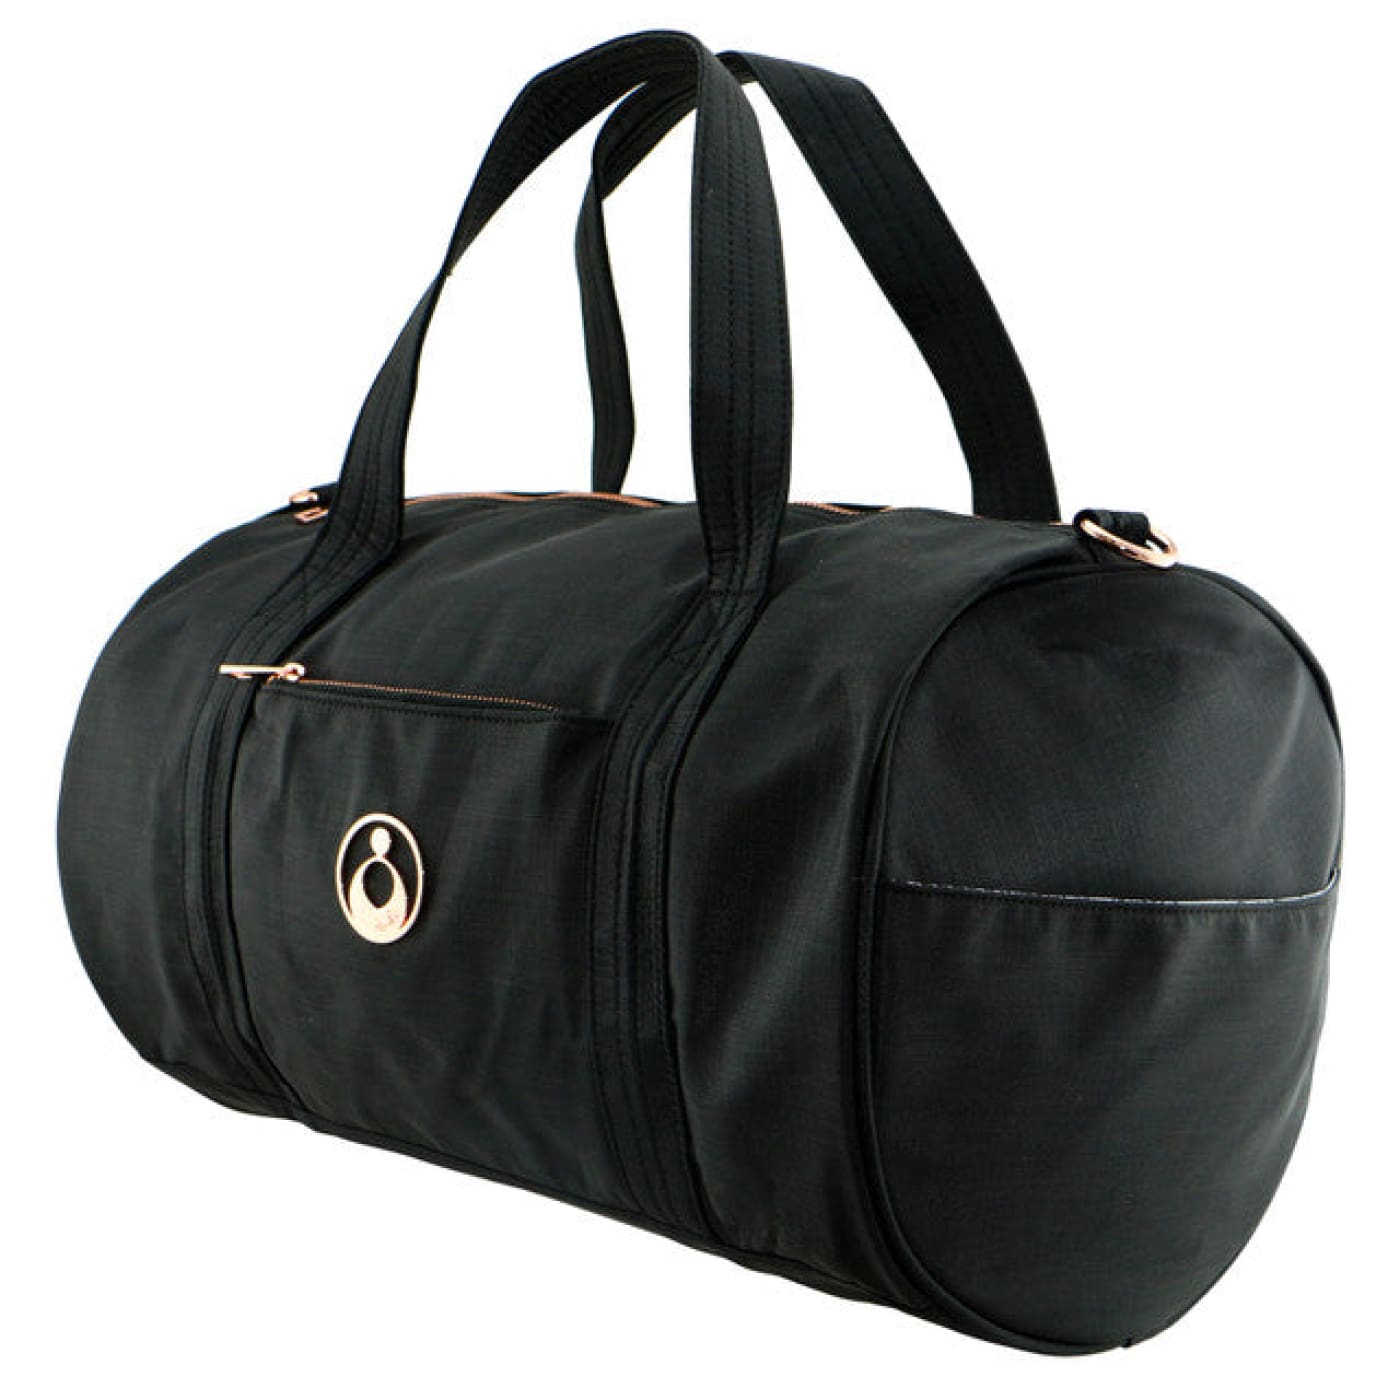 Isoki Kingston Duffle Bag Nappy Bag - Black Nylon - Black Nylon - ON THE GO - NAPPY BAGS/LUGGAGE